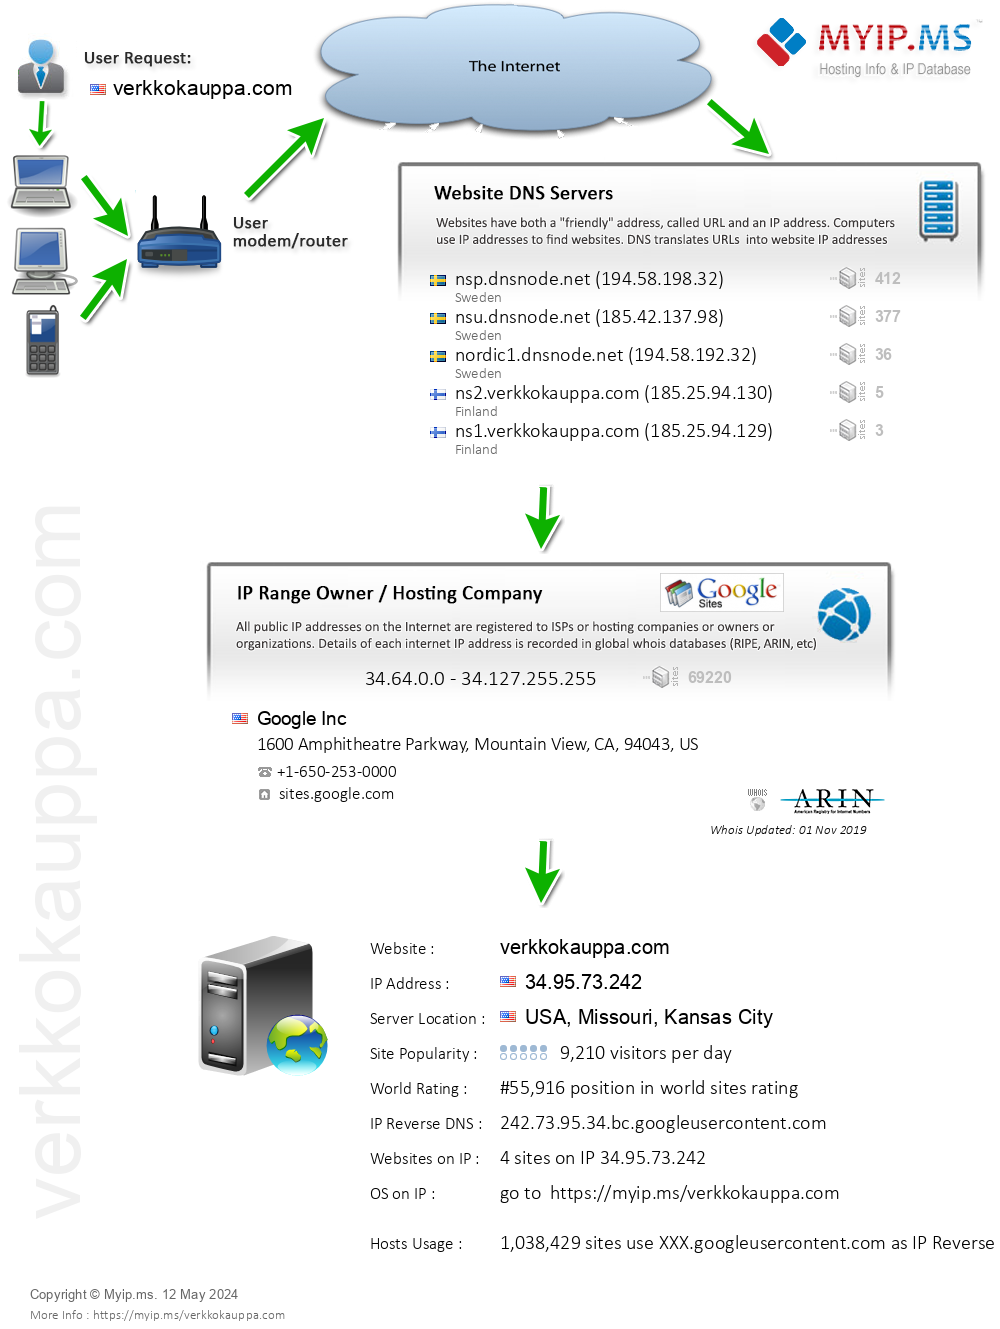 Verkkokauppa.com - Website Hosting Visual IP Diagram